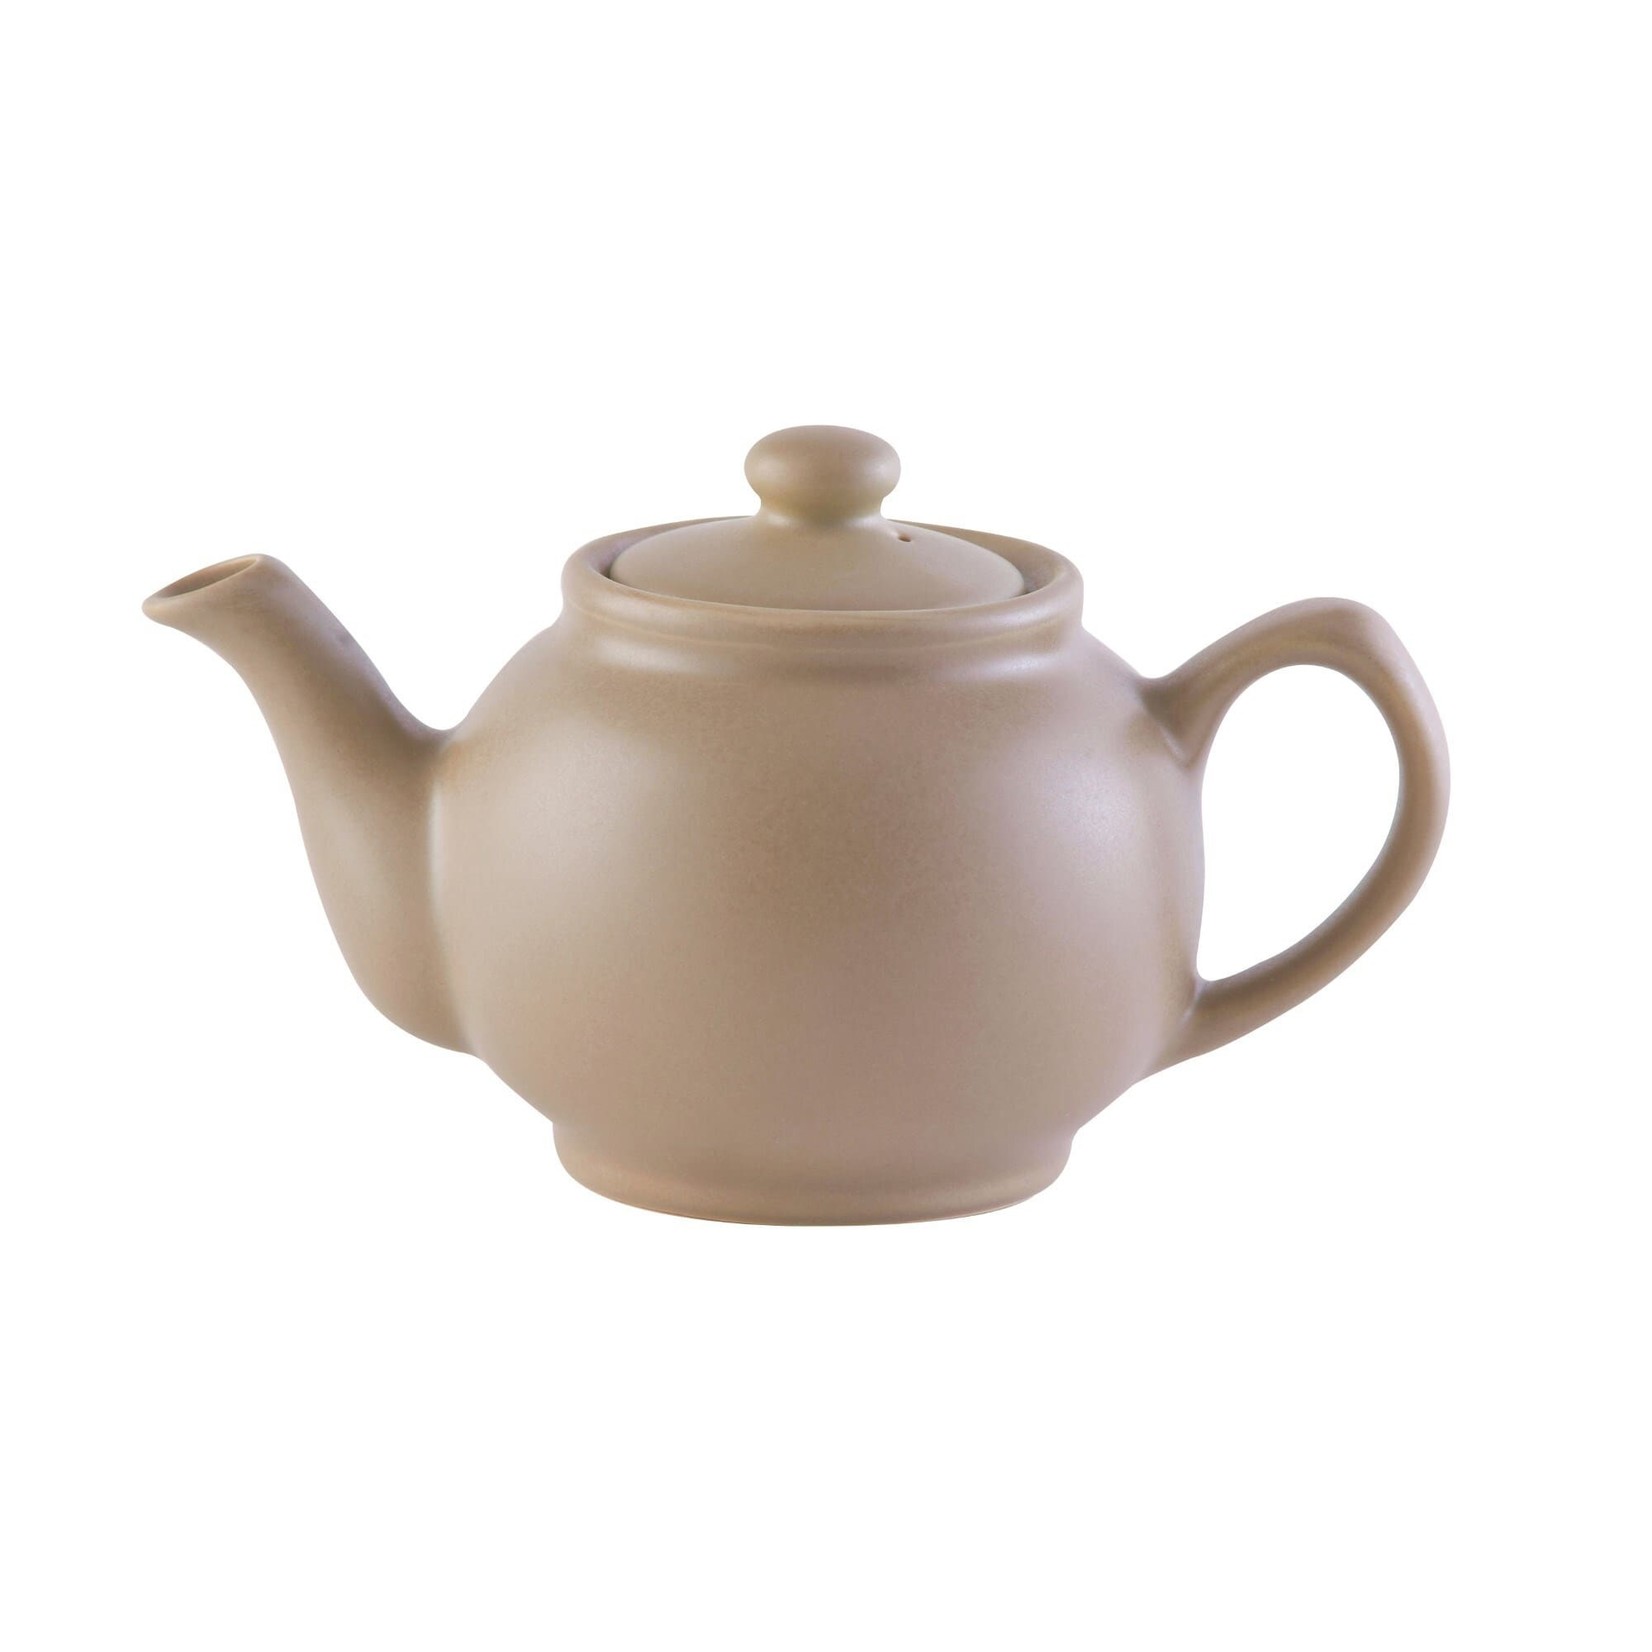 PRICE & KENSINGTON PRICE & KENSINGTON Teapot 6 Cup - Matte Taupe